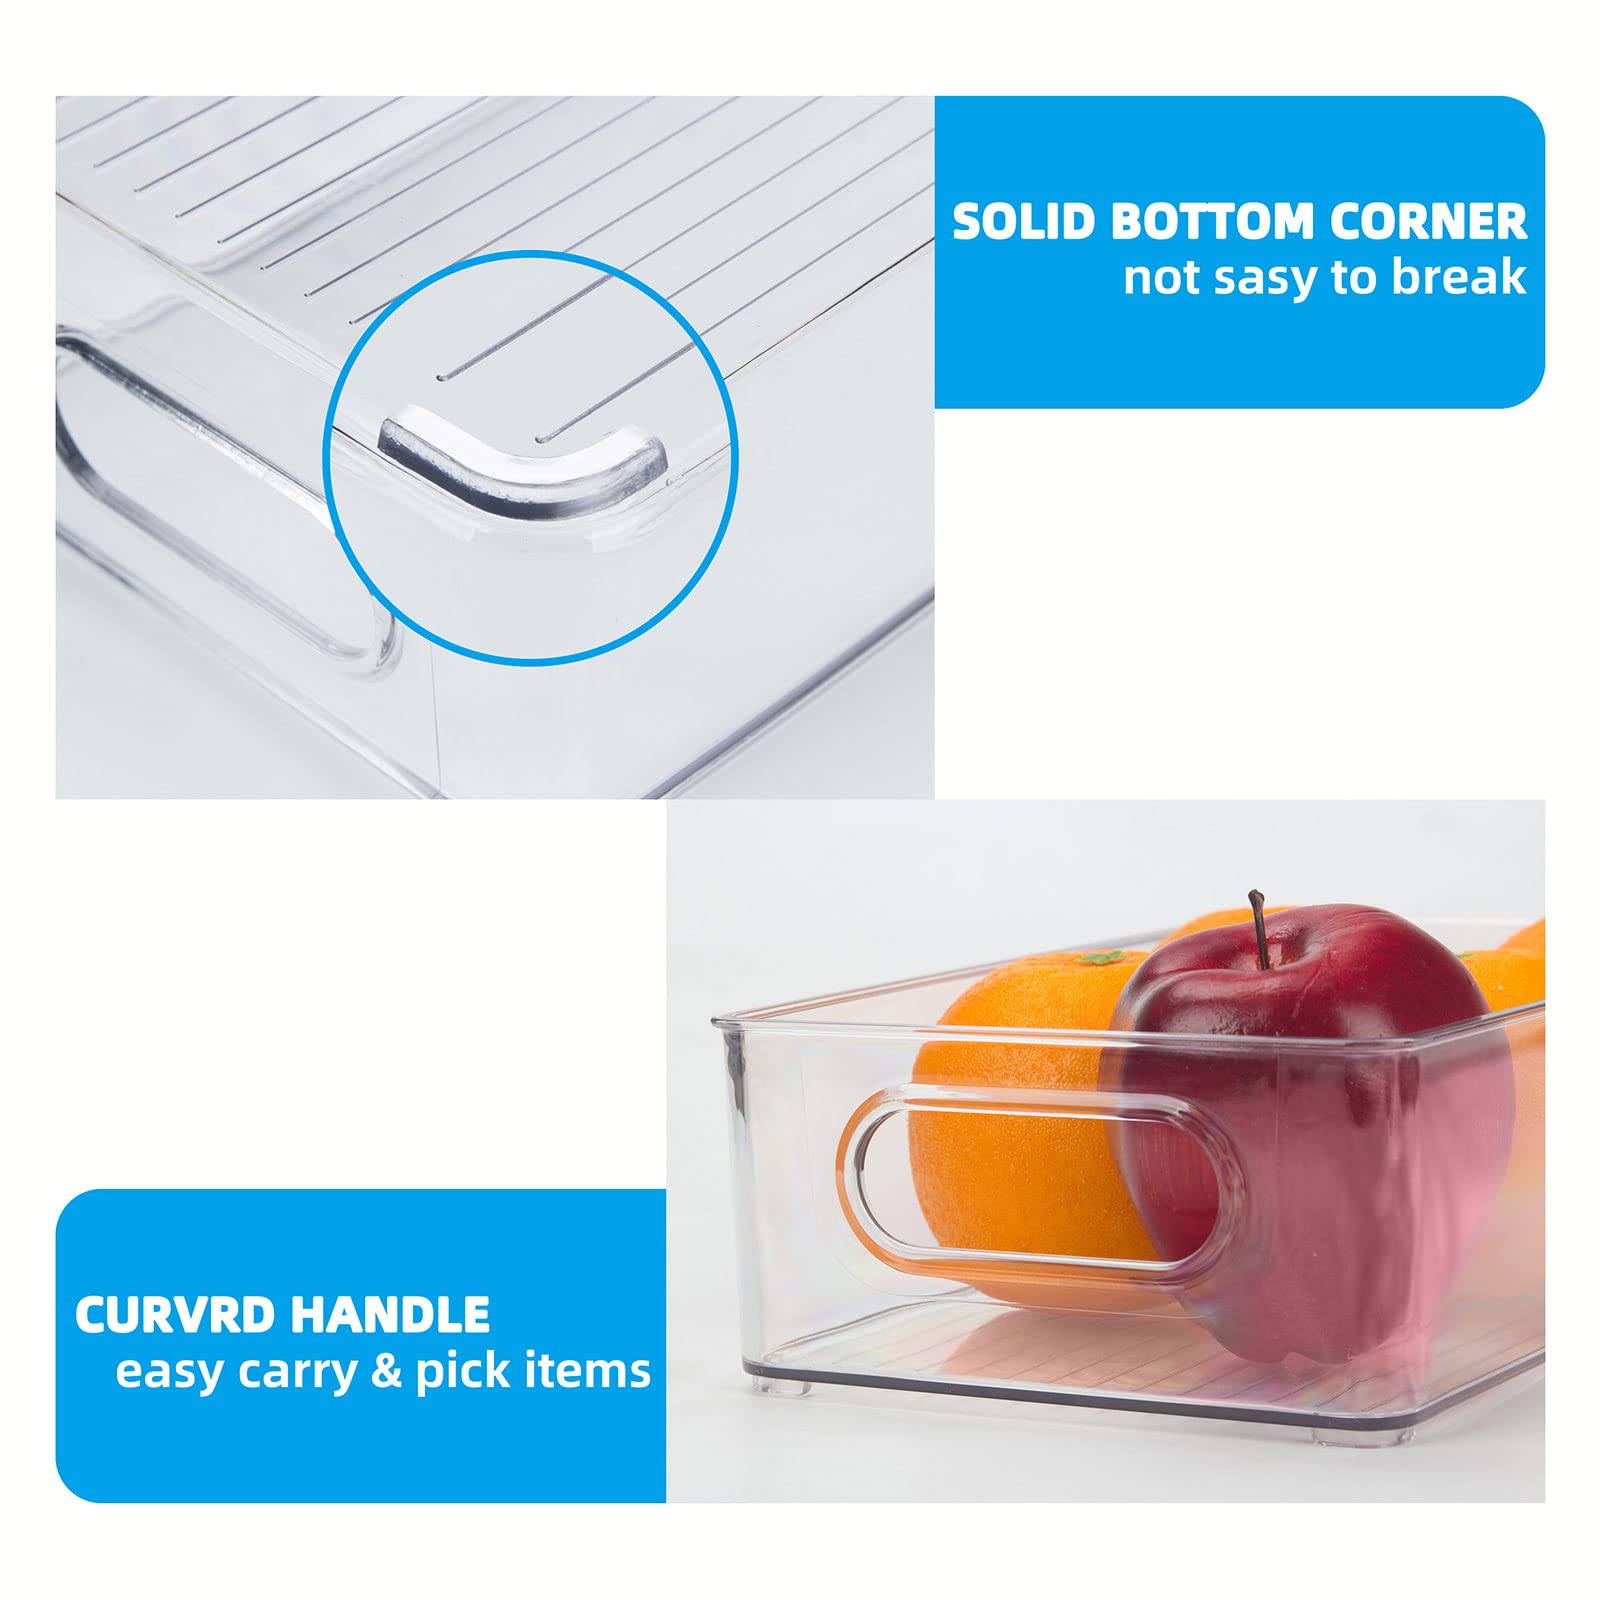 Eco Moda Set Of 6 Refrigerator Organizer Bins - 3 Sizes Stackable Plastic Clear Food Storage Bin